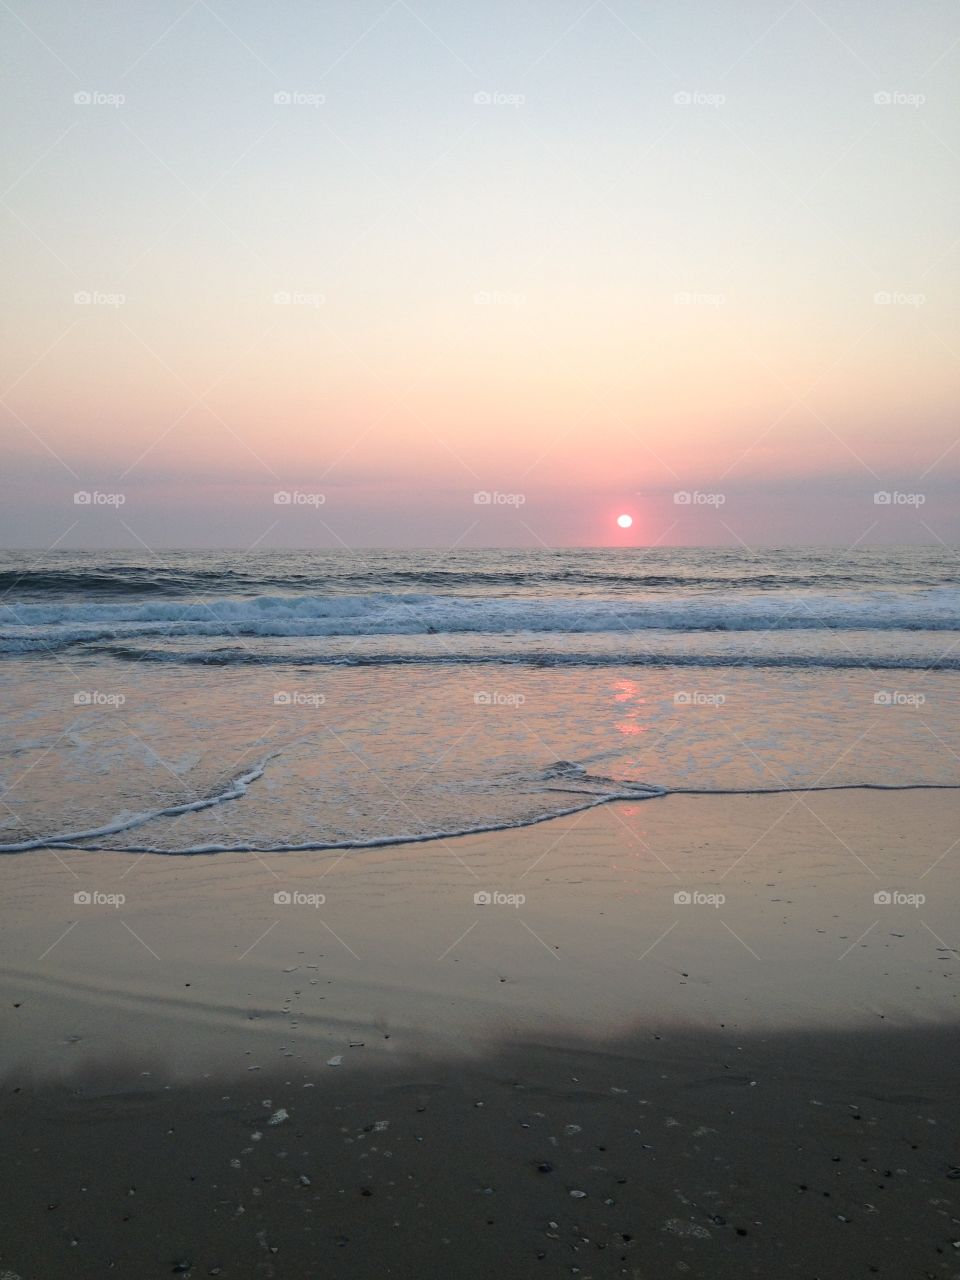 Outer Banks sunrise 